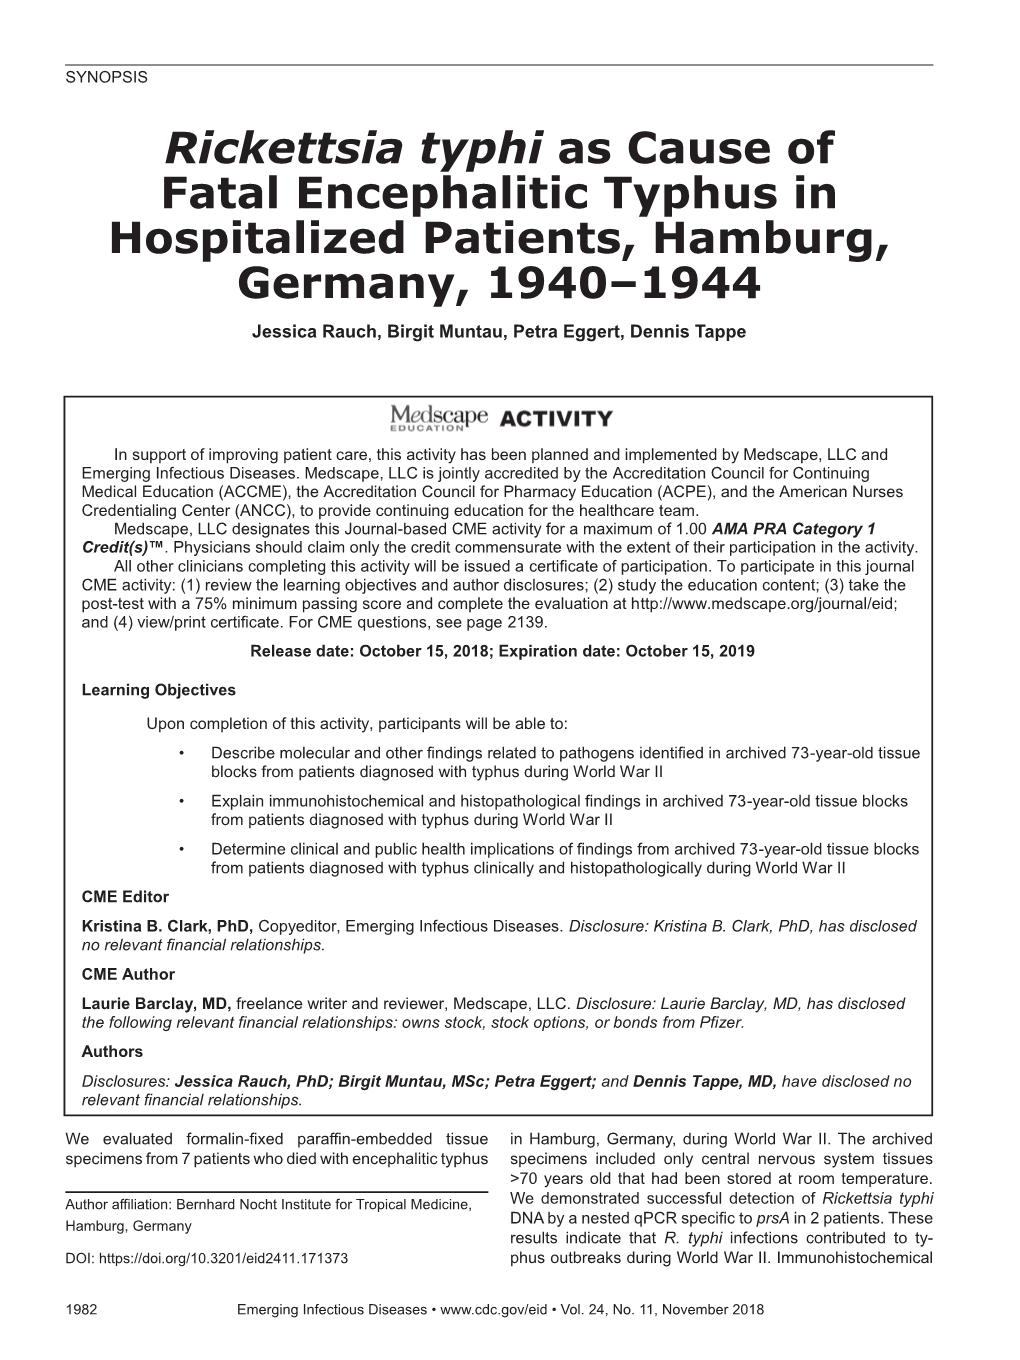 Rickettsia Typhi As Cause of Fatal Encephalitic Typhus in Hospitalized Patients, Hamburg, Germany, 1940–1944 Jessica Rauch, Birgit Muntau, Petra Eggert, Dennis Tappe